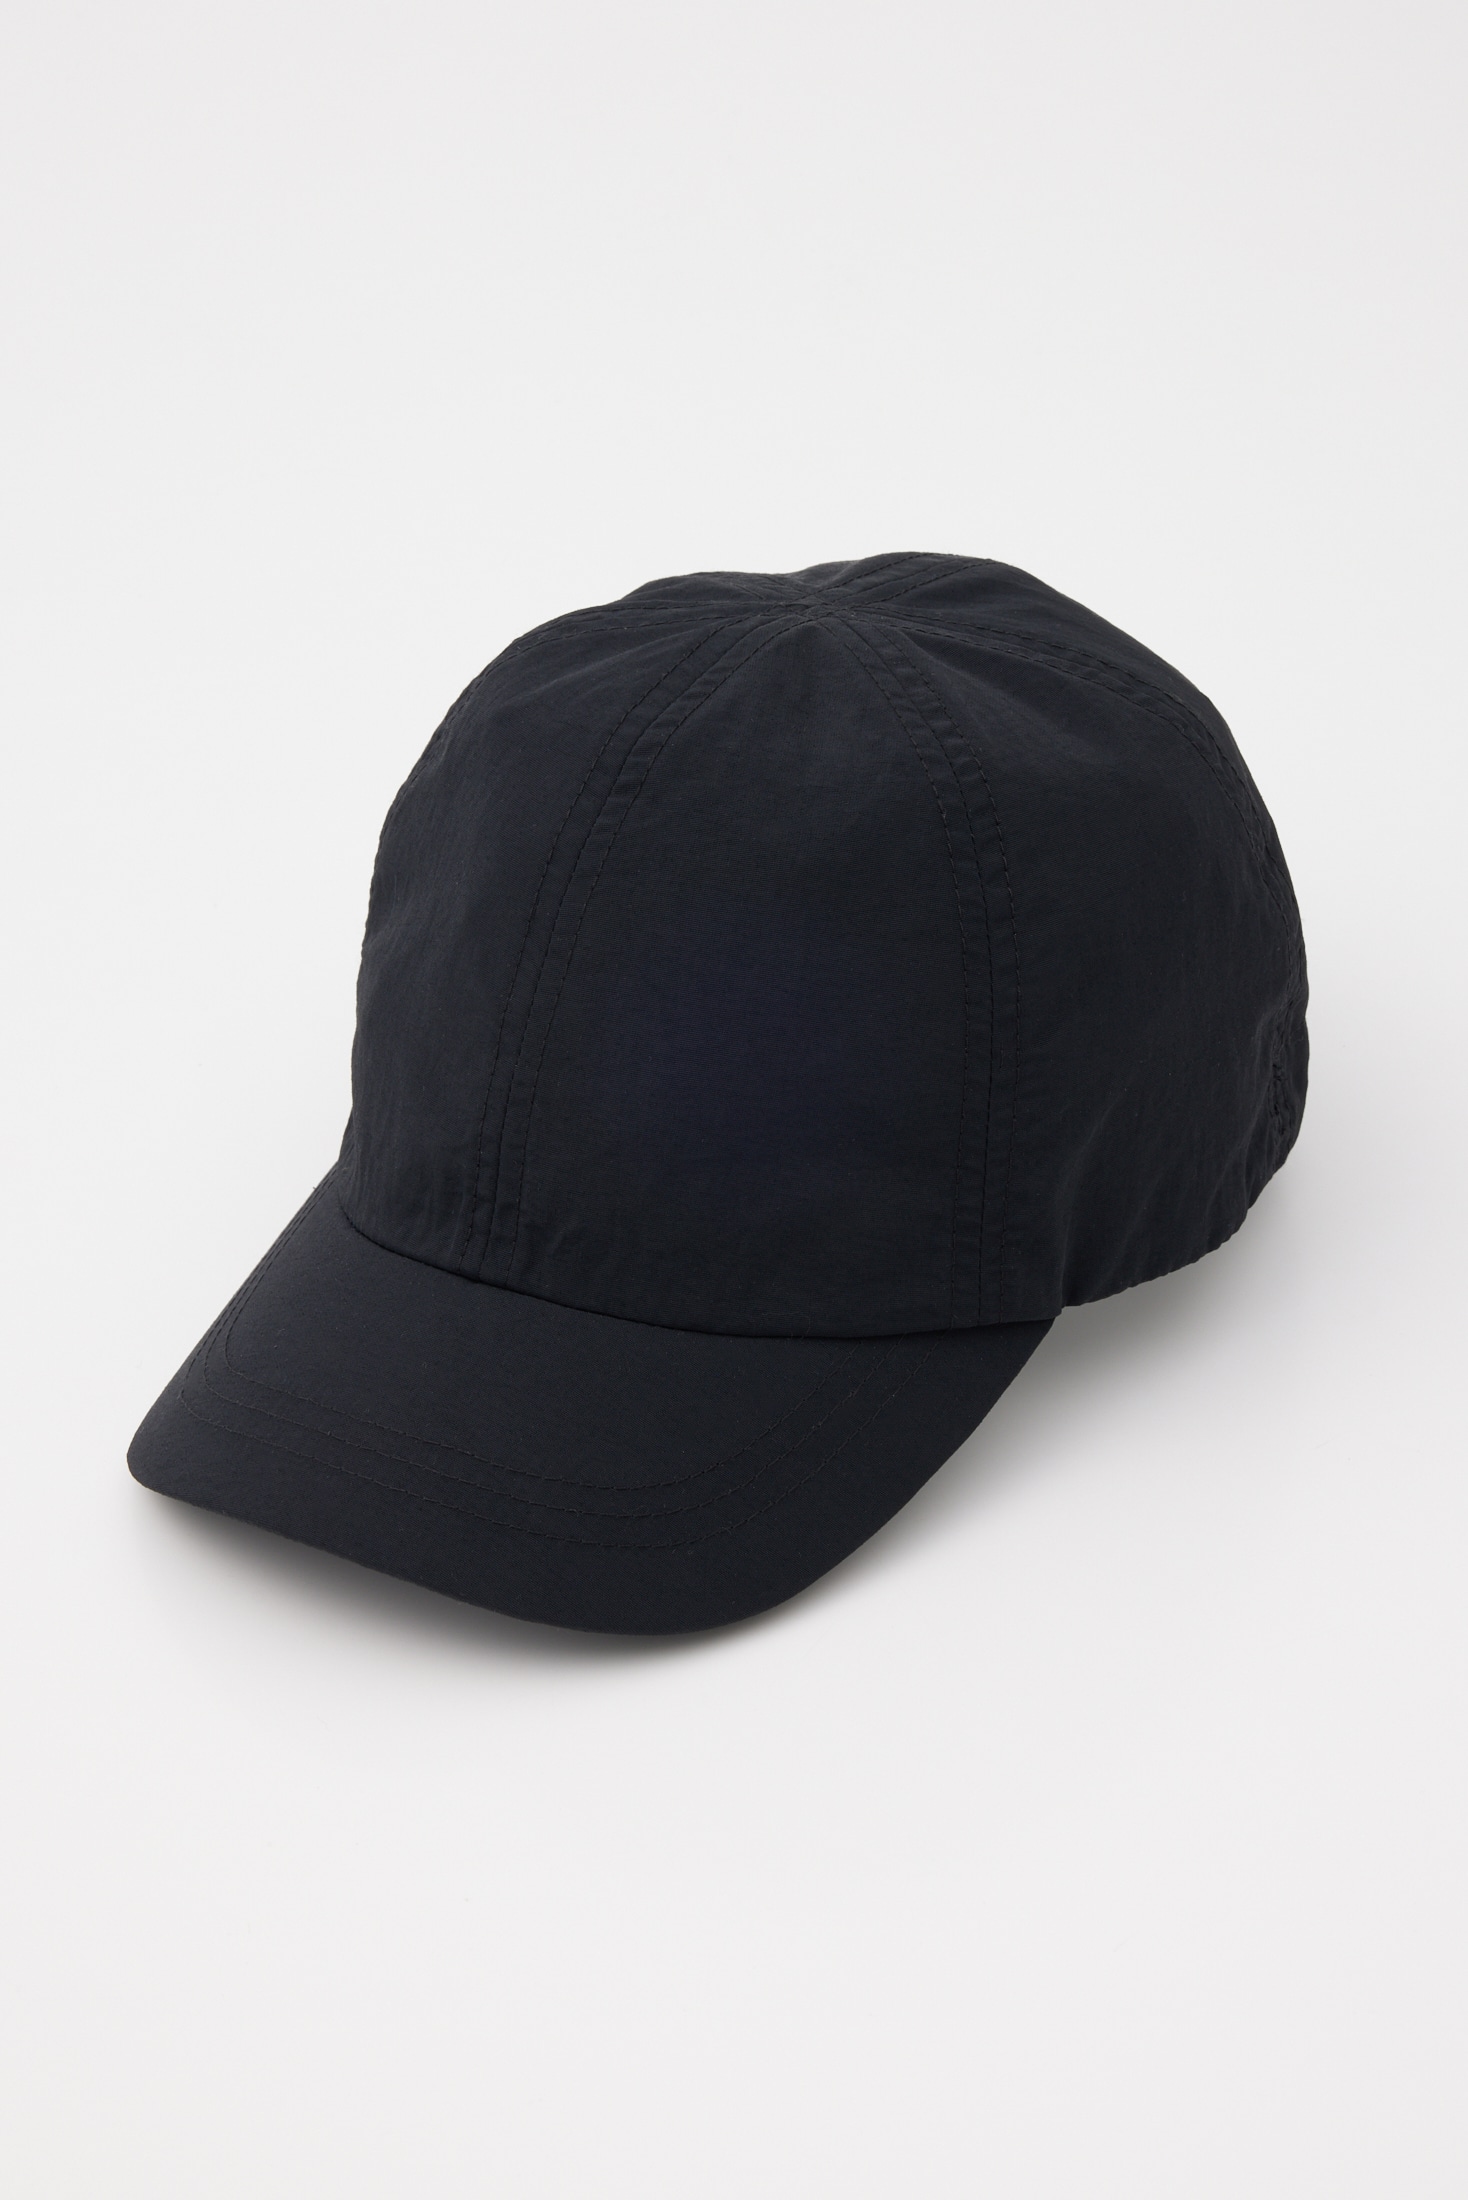 woven black cap